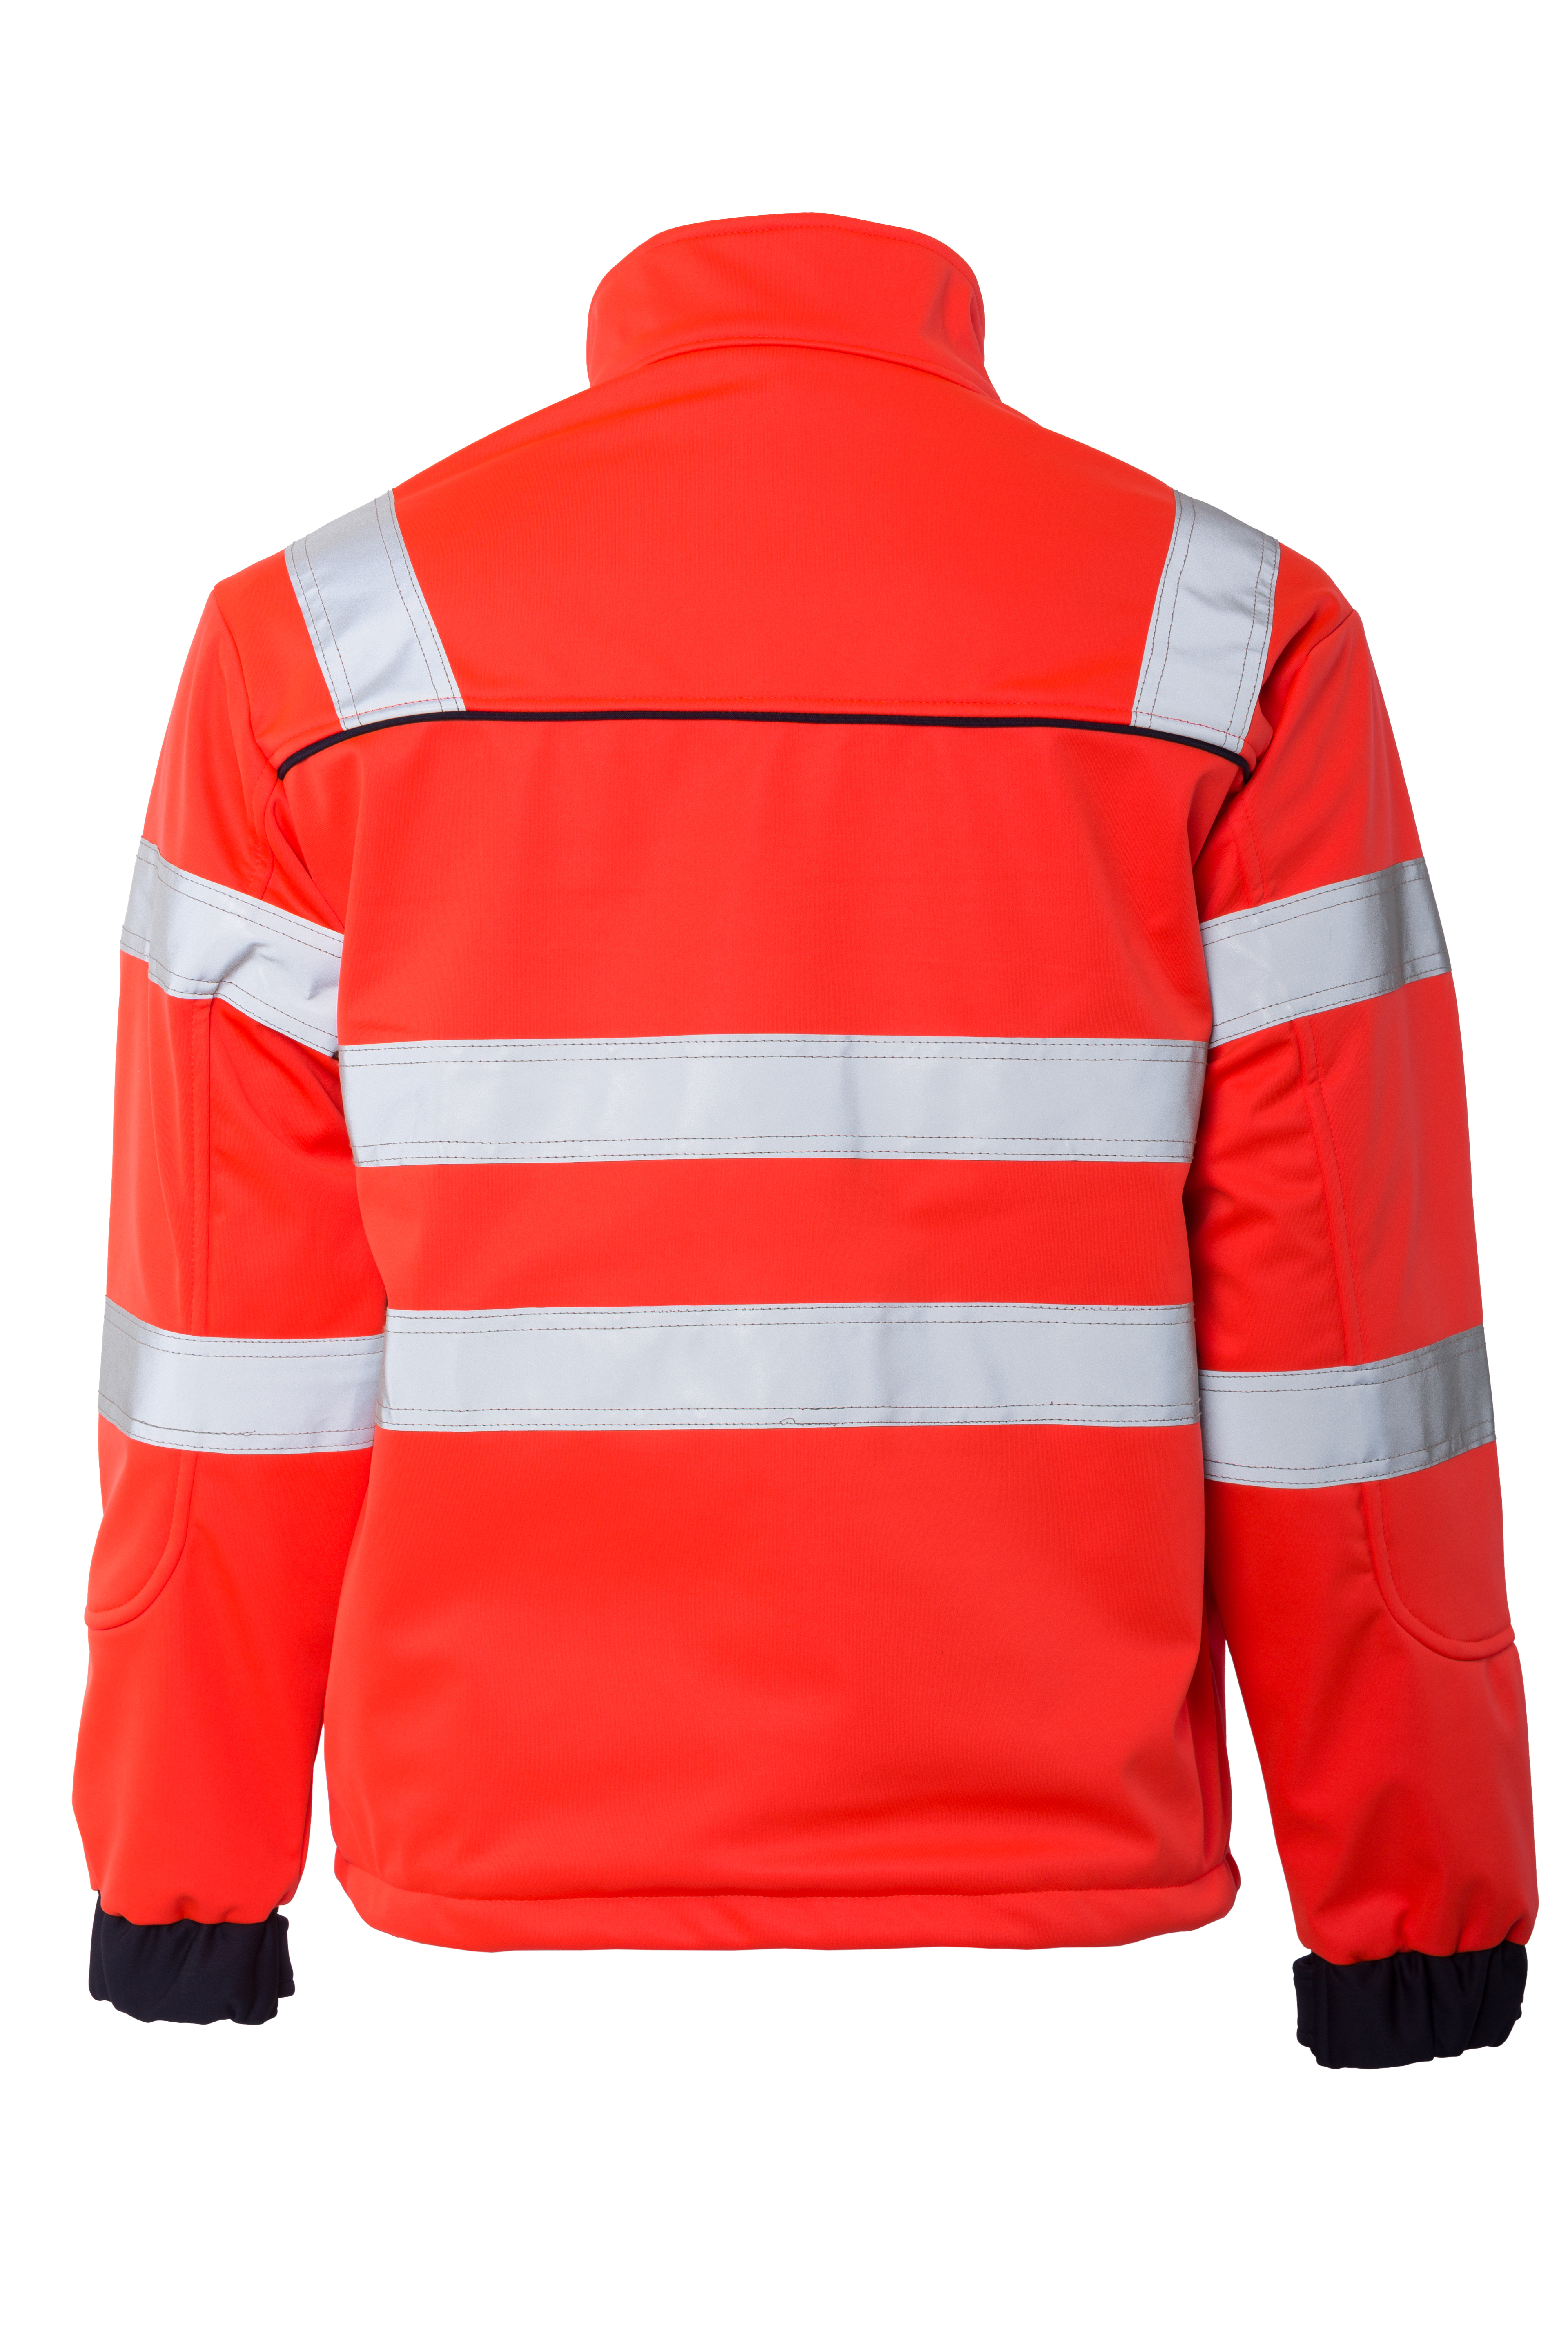 Rescuewear Softshelljacke Dynamic HiVis Klasse 3 Marineblau / Neon Rot `W-Linie`  - L